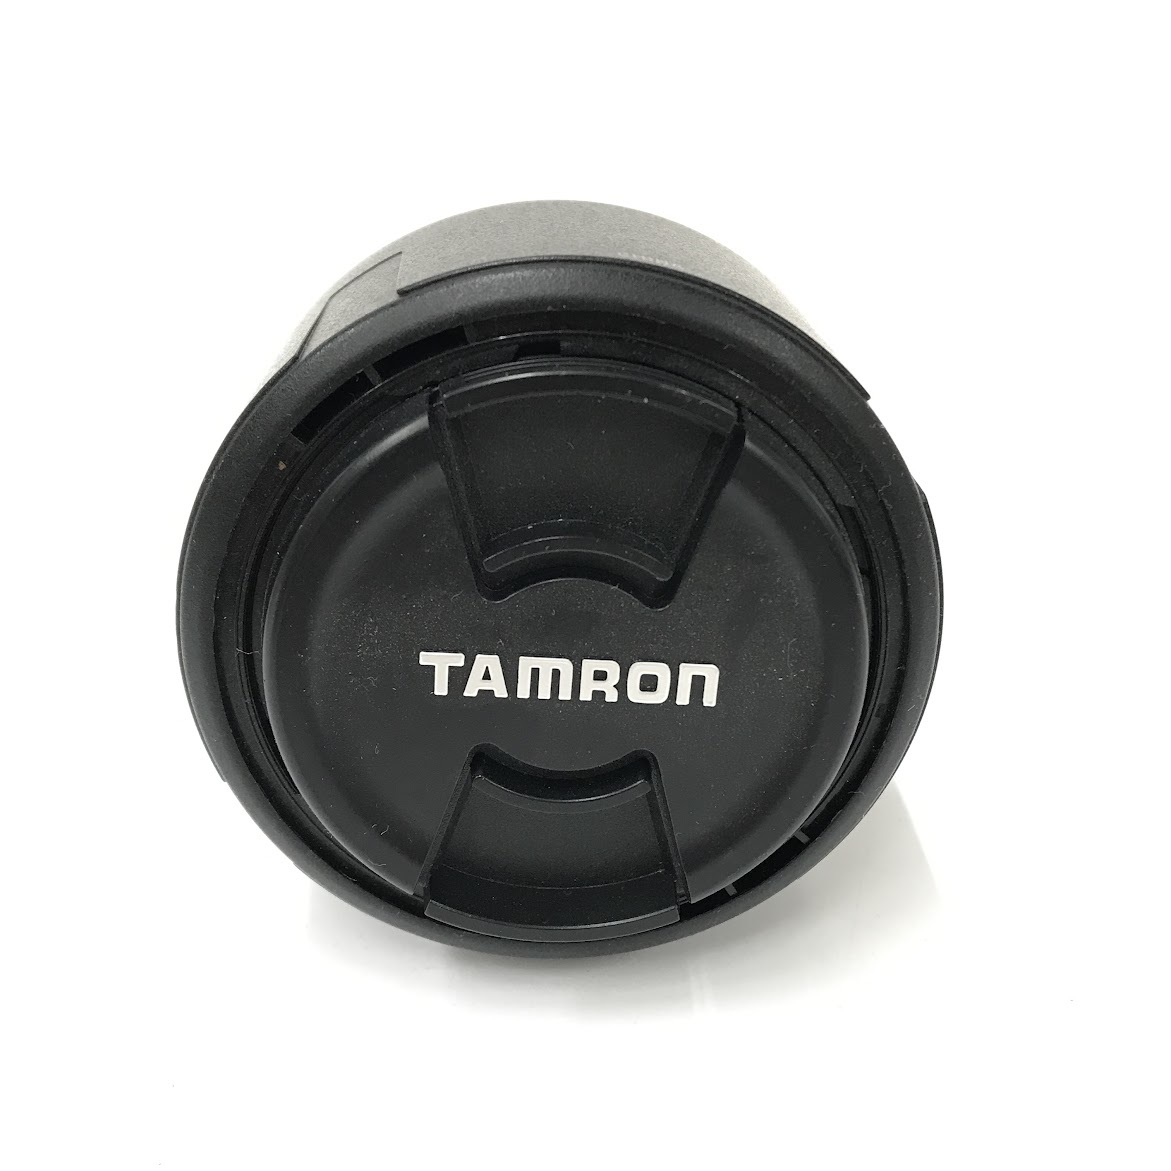 【itoep8542eus】TAMRON タムロン レンズ 70-300mm 1:4-5.6 TELE-MACRO ズーム カメラ レンズ オートフォーカスの画像1